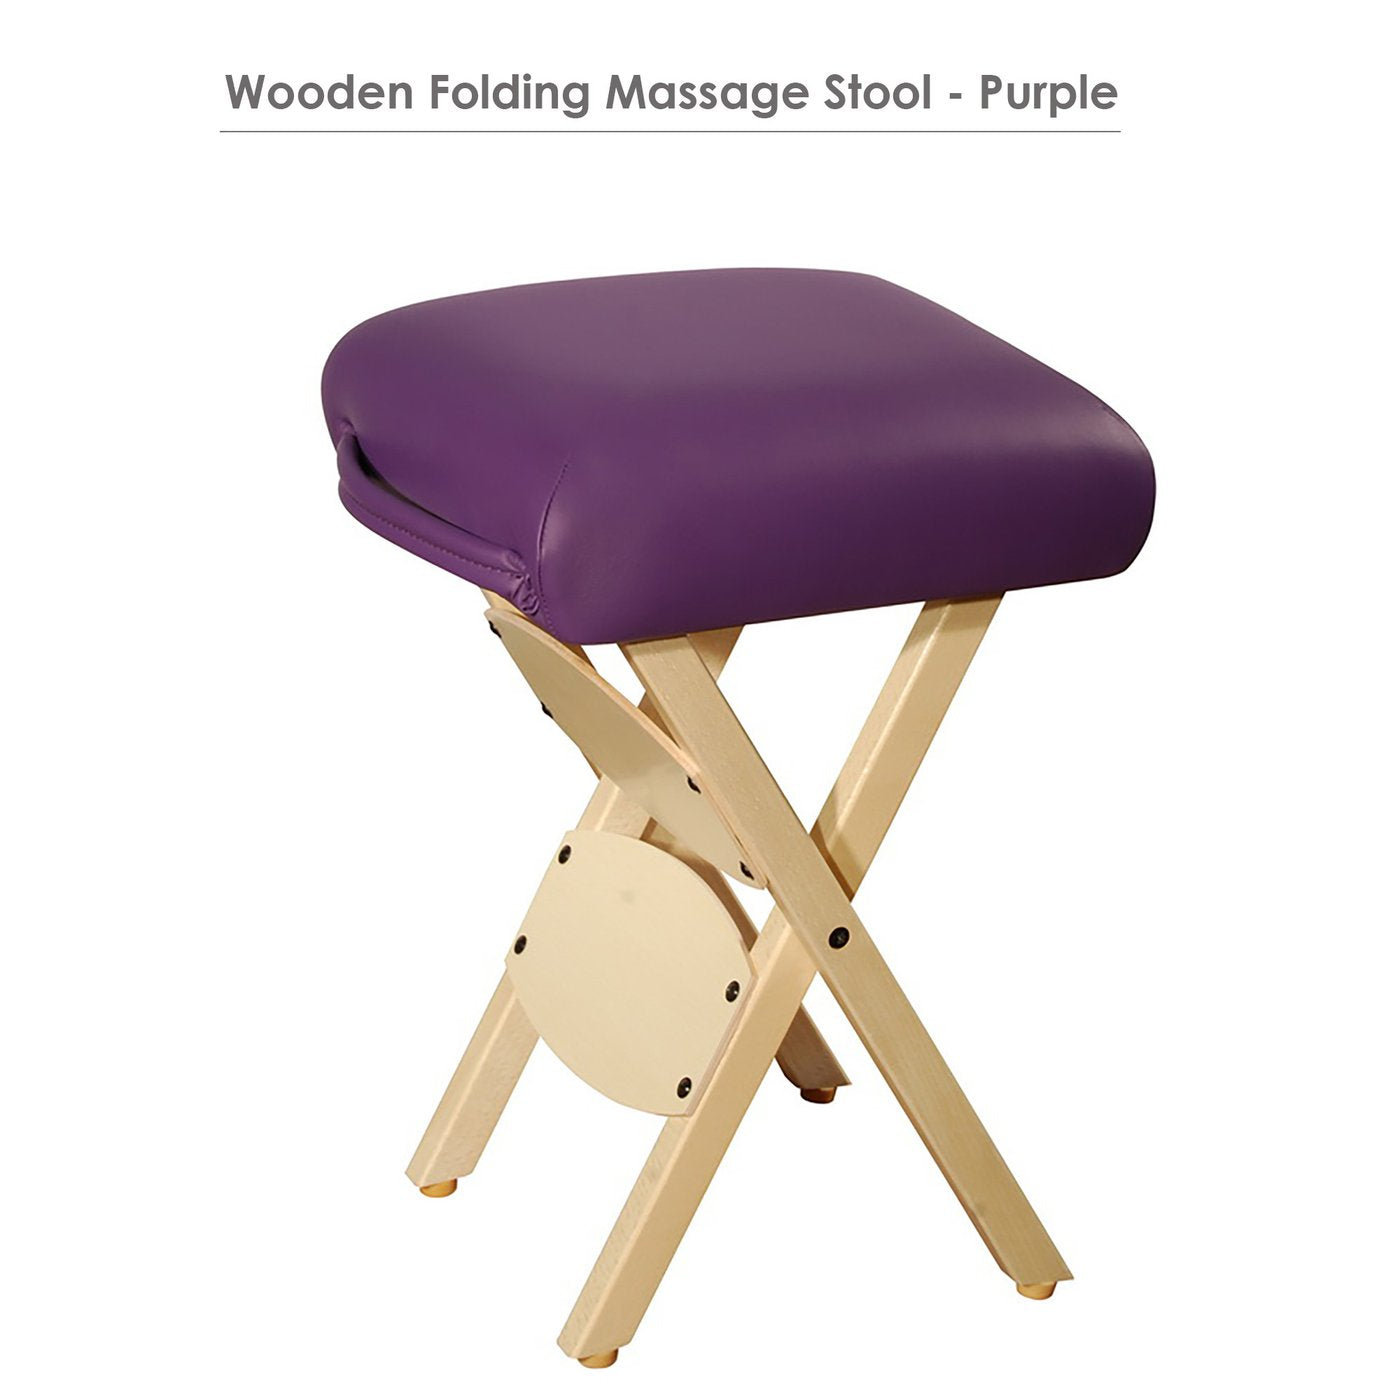 Wooden Folding Massage Stool